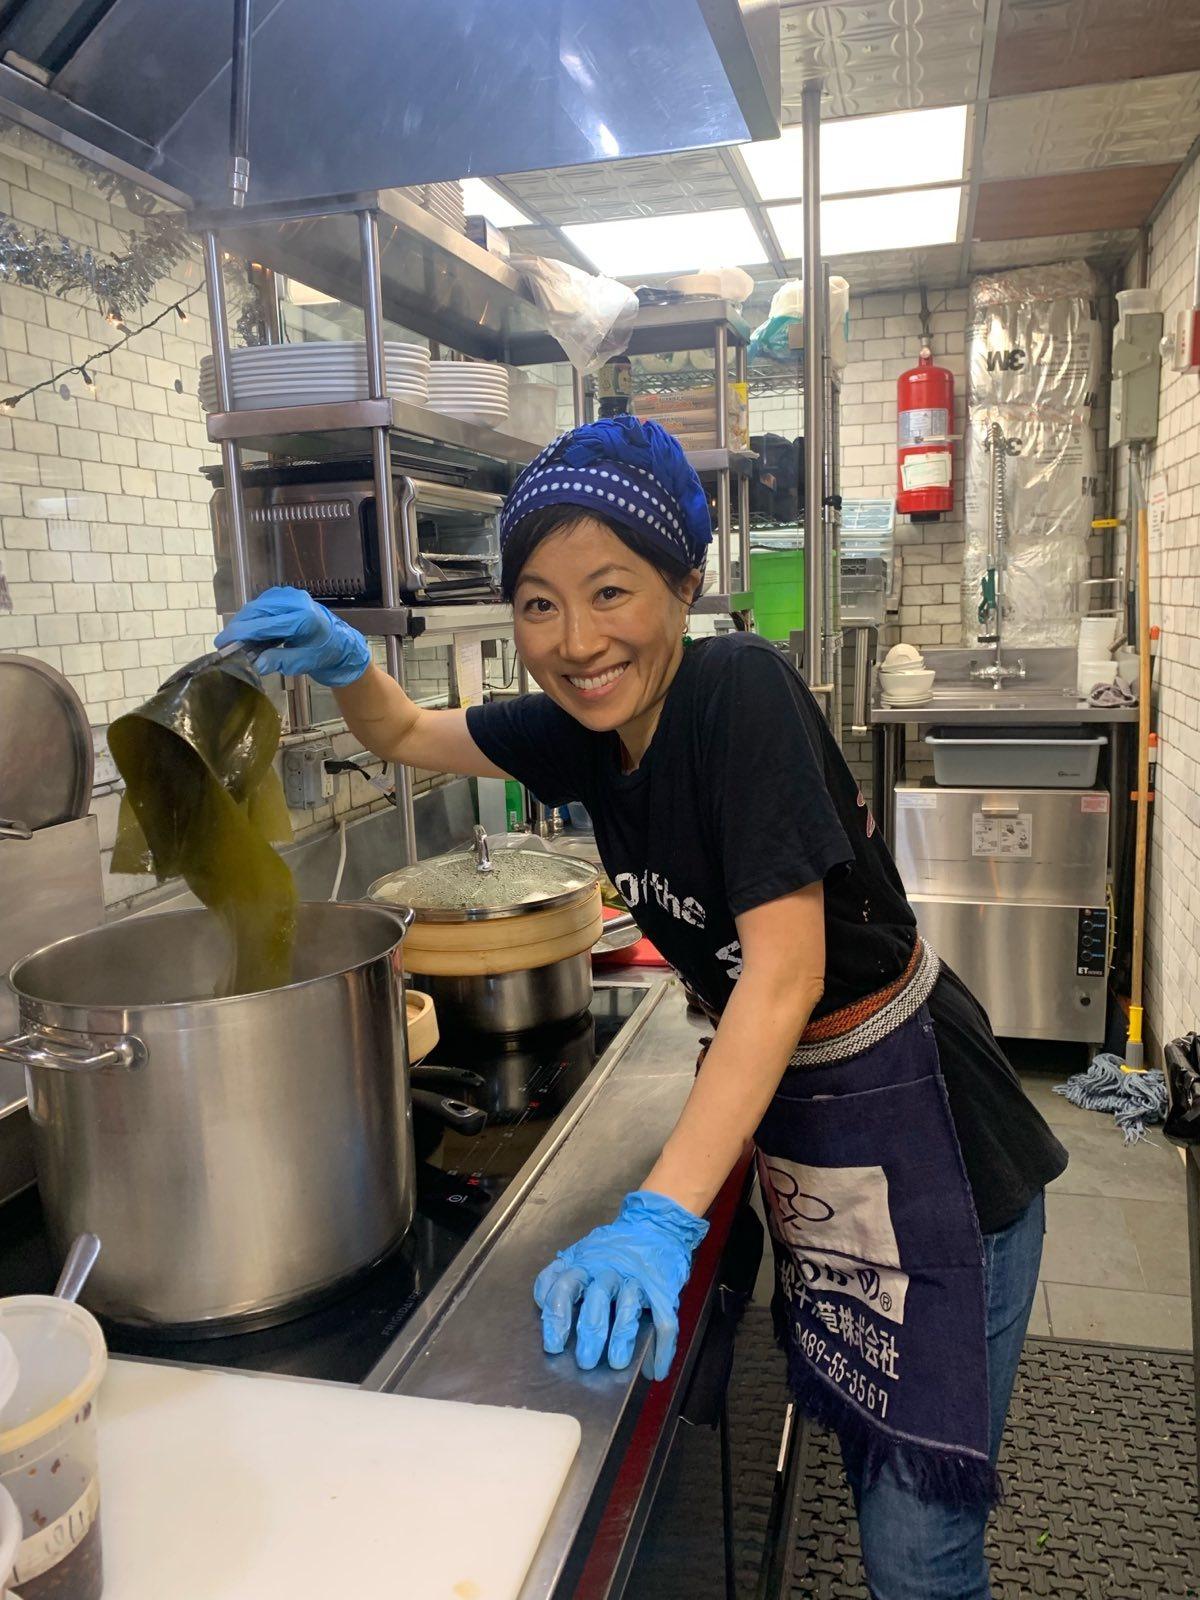 Yumiko Komatsudaira, who goes by "Nonna Yumi," cooks in the kitchen at Enoteca Maria. (Courtesy of Enoteca Maria)